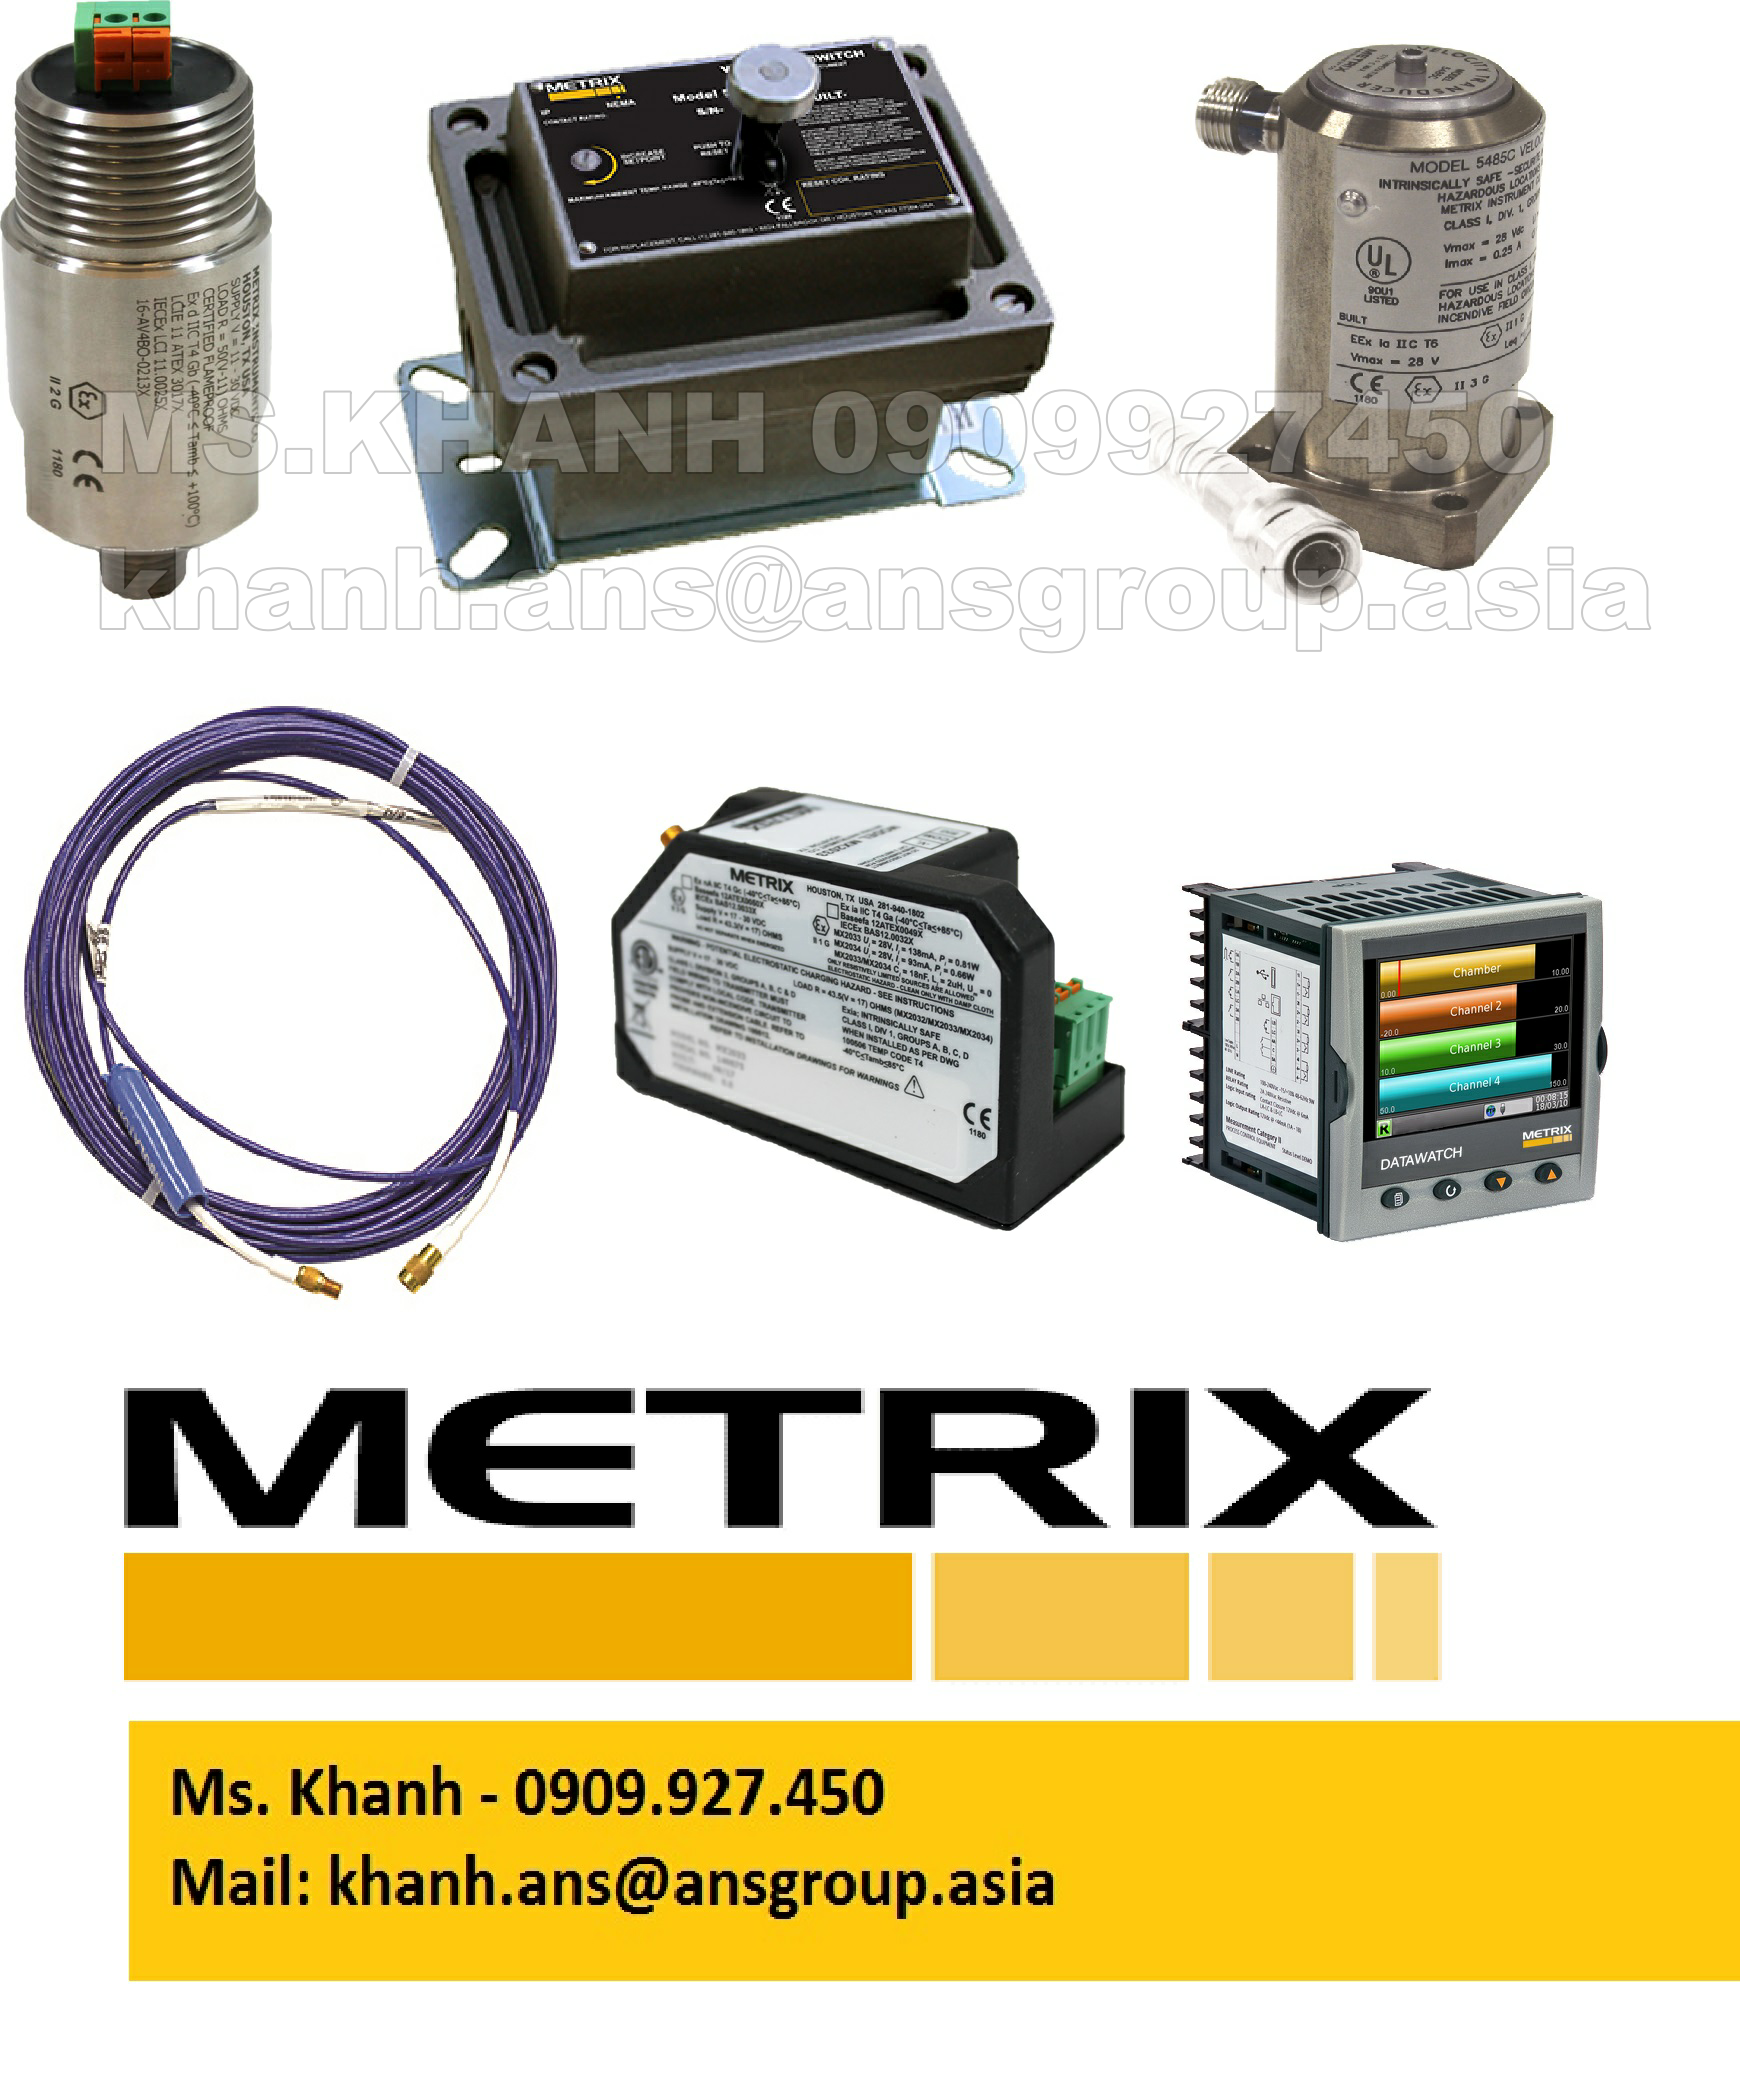 cam-bien-5550-422-041-mechanical-vibration-switch-metrix-vietnam-1.png